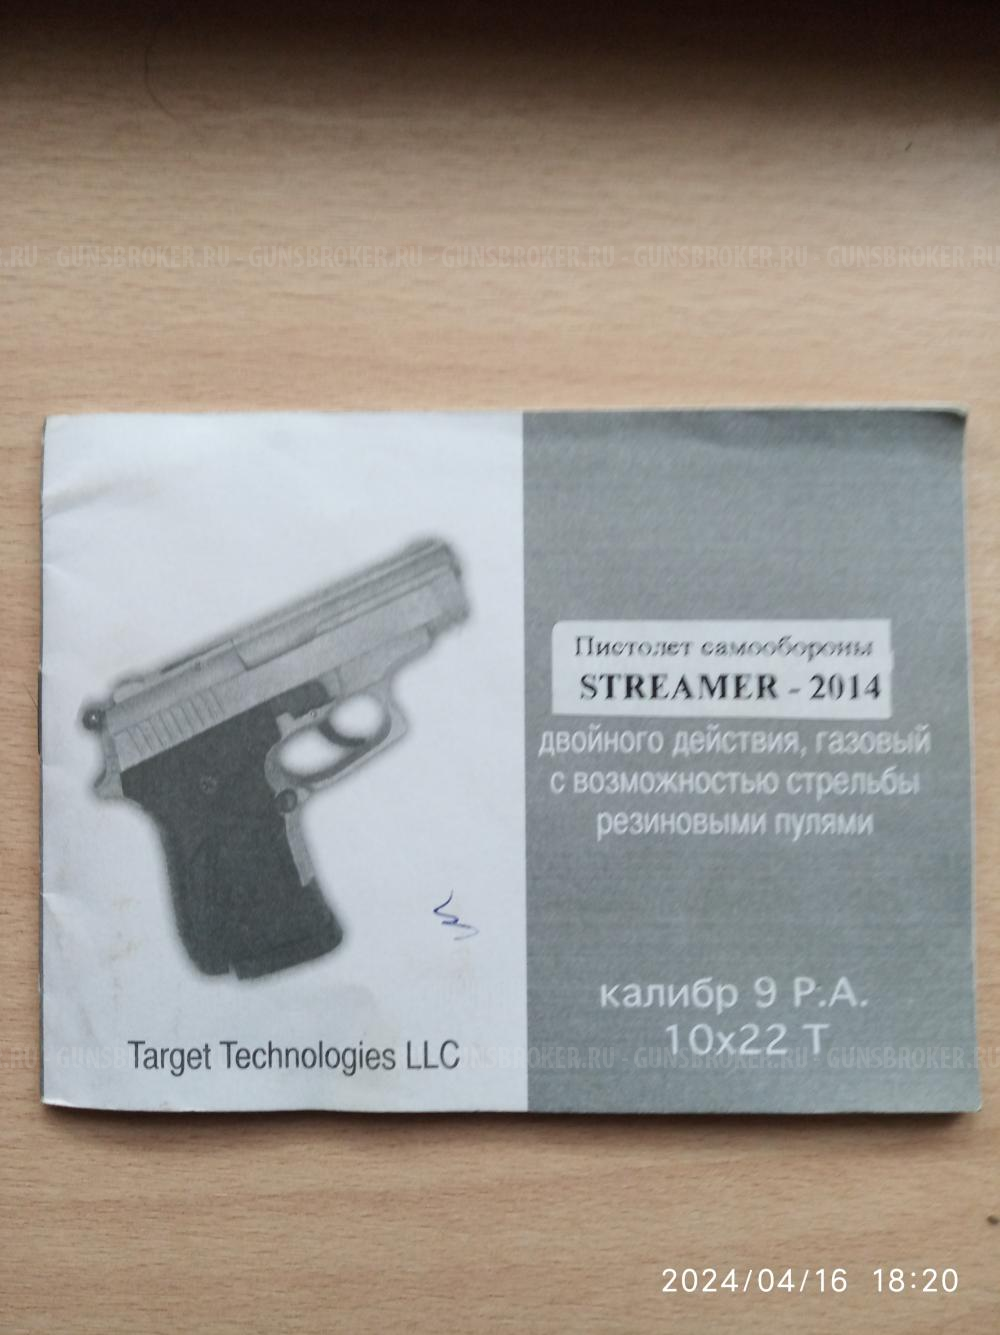 пистолет самообороны STREAMER-2014